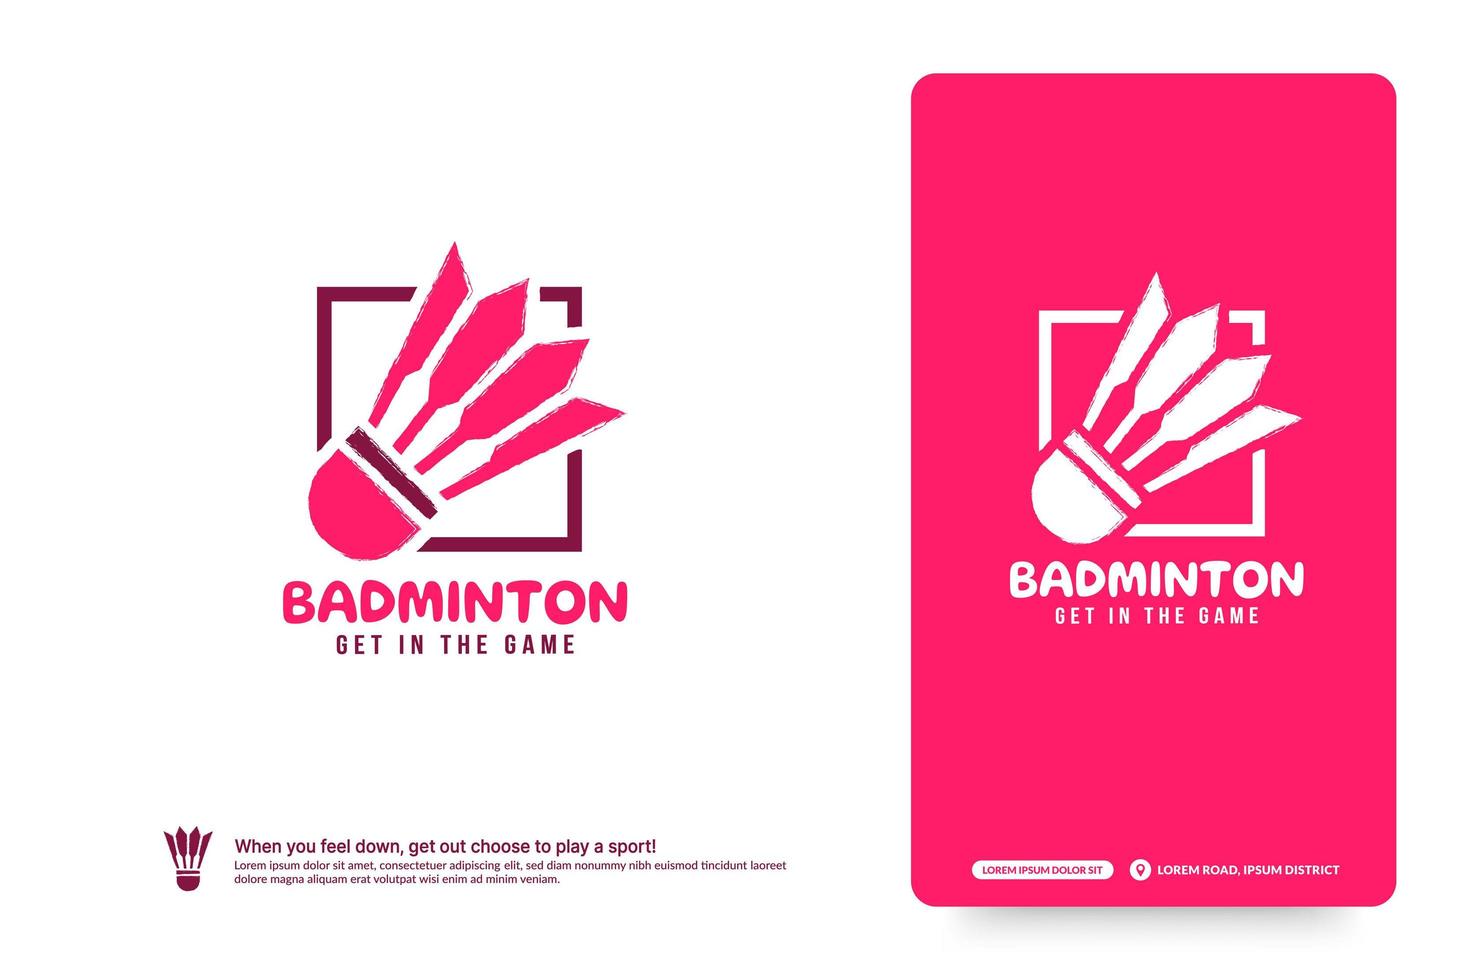 Badminton club logo design template, Badminton tournaments logotype concept. Badminton team identity isolated on white Background, Abstract sport symbol design vector illustrations